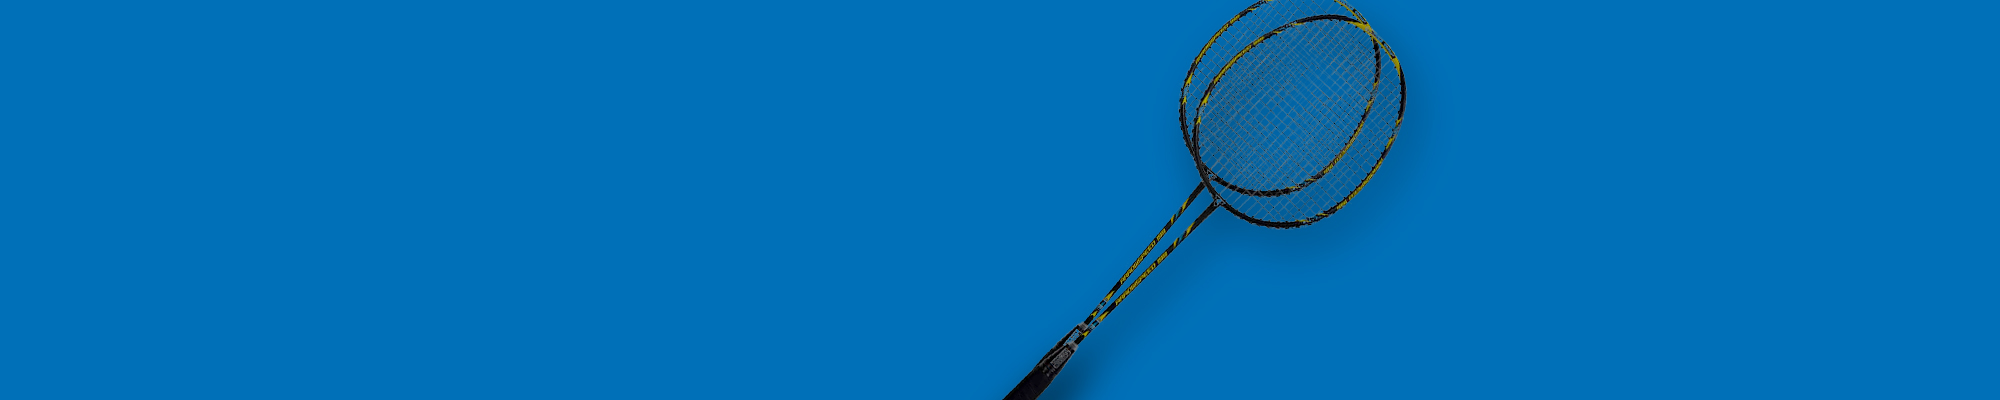 Talbot-Torro | High Quality Badminton Equipment | Mad-HQ